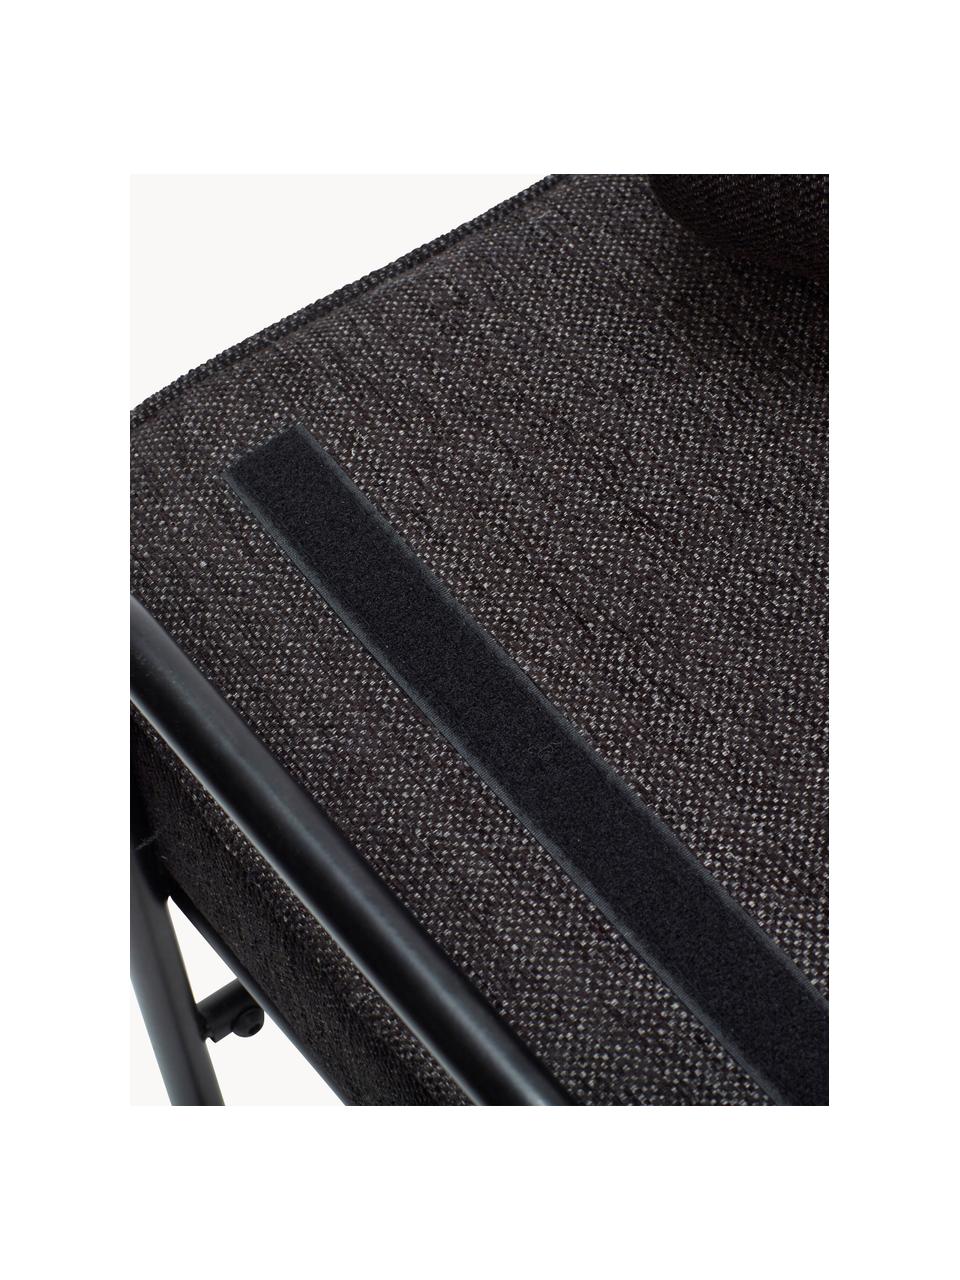 Banco tapizado Pipe, Tapizado: 100% poliéster, Estructura: metal recubierto, Tejido marrón oscuro, negro, An 106 x F 47 cm